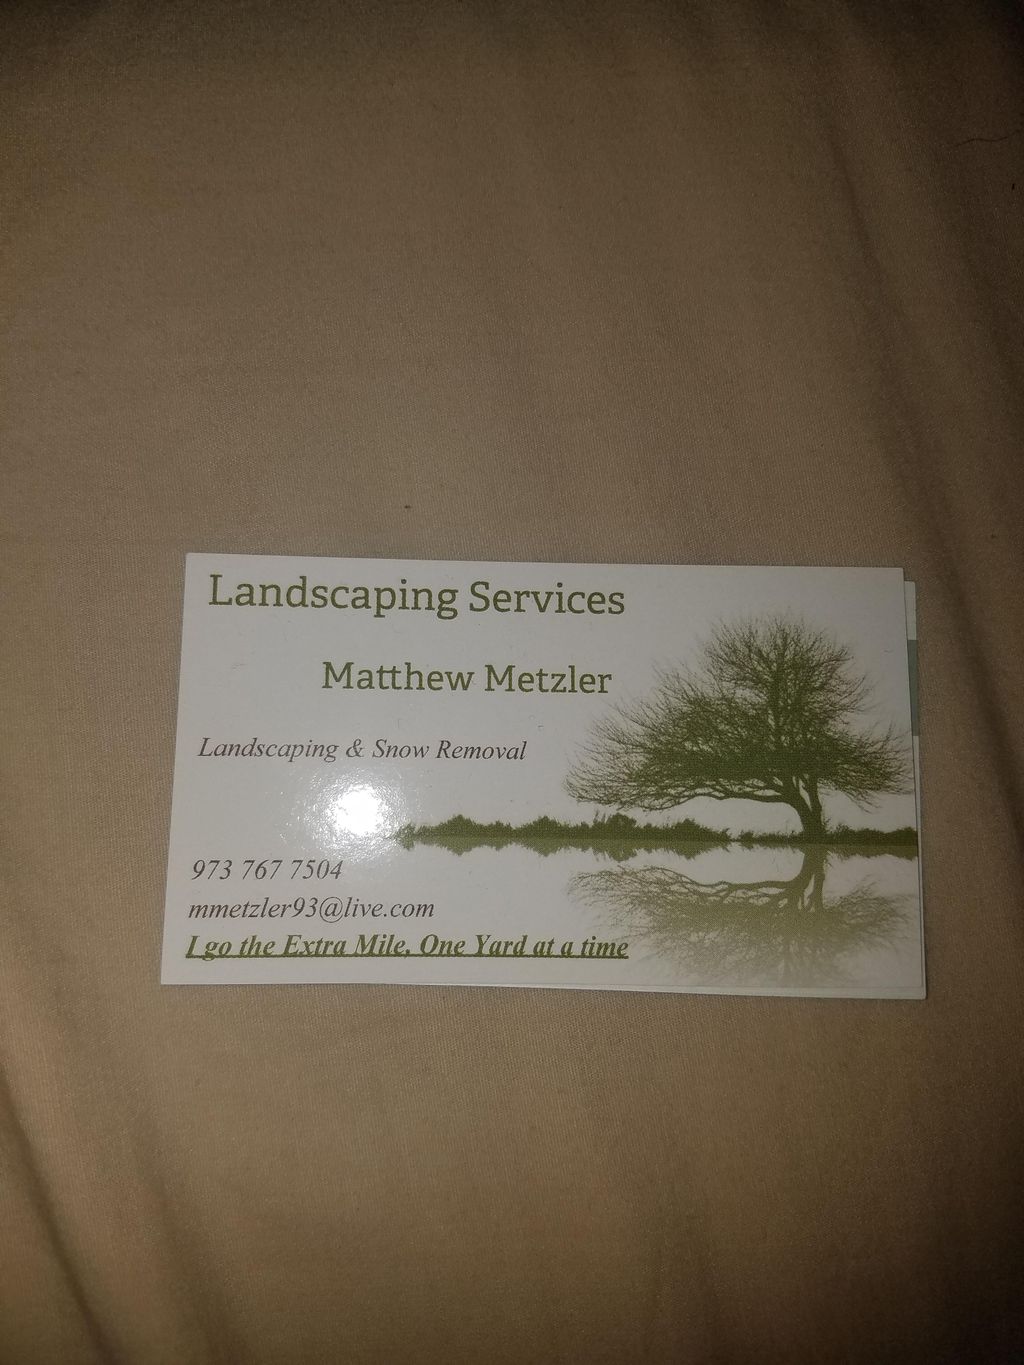 matthew metzler landscaping